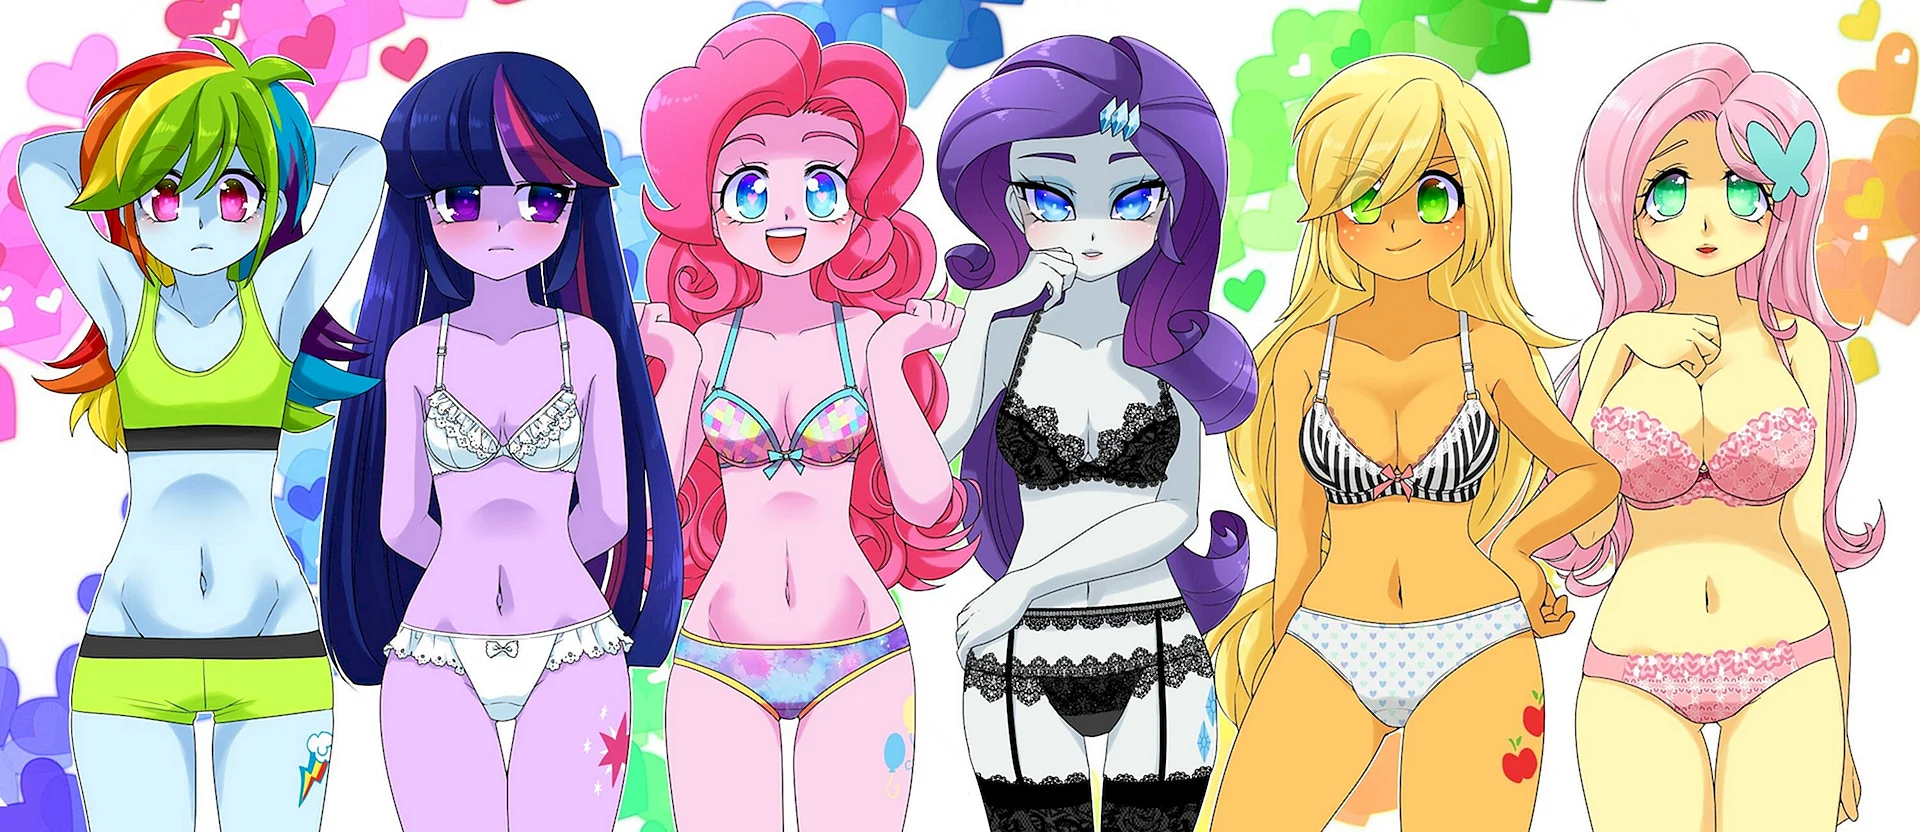 Equestria Girls Anime Wallpaper